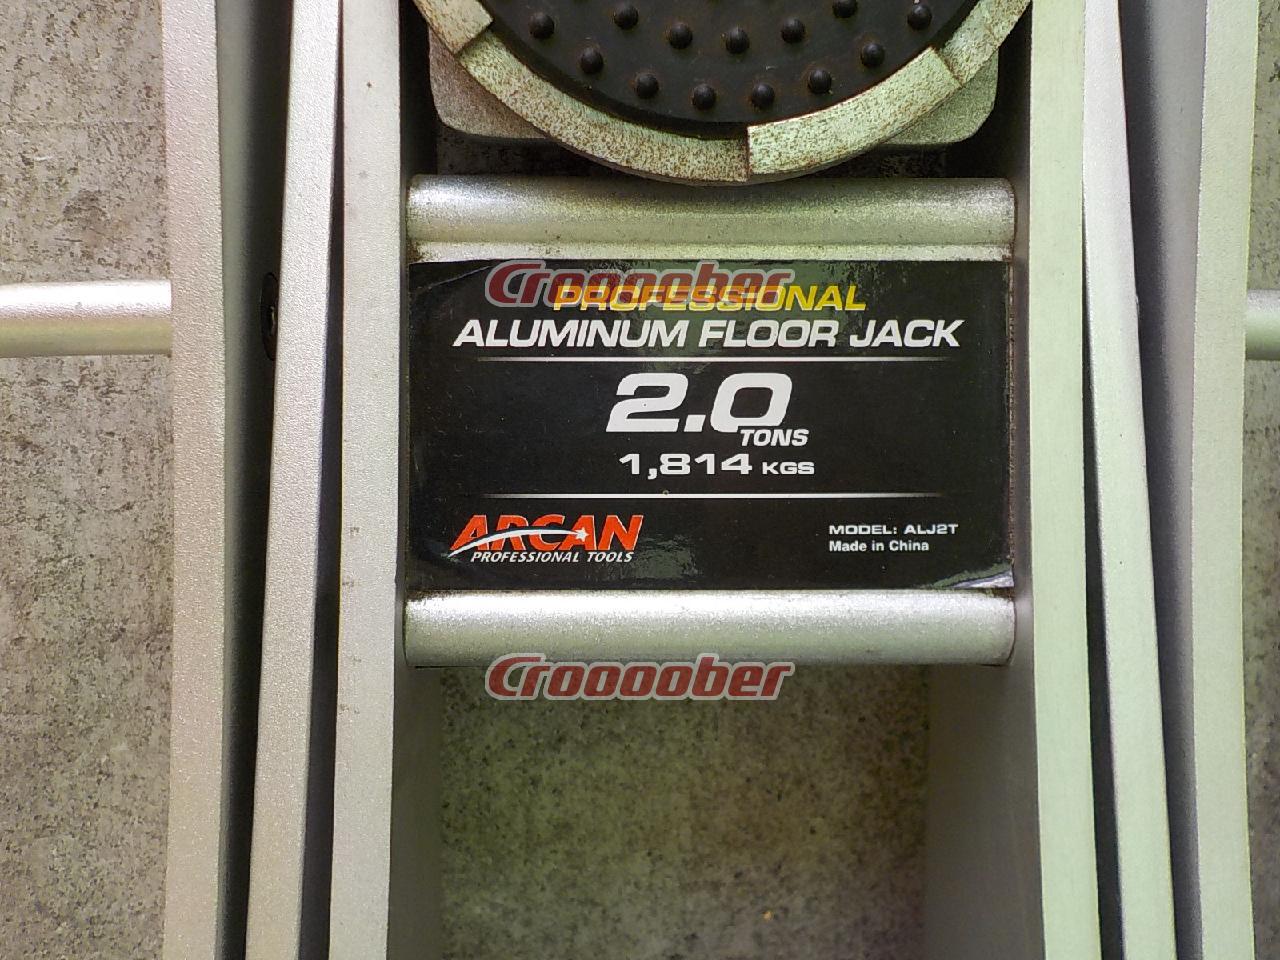 Arcan ALJ2T Aluminum Floor Jack